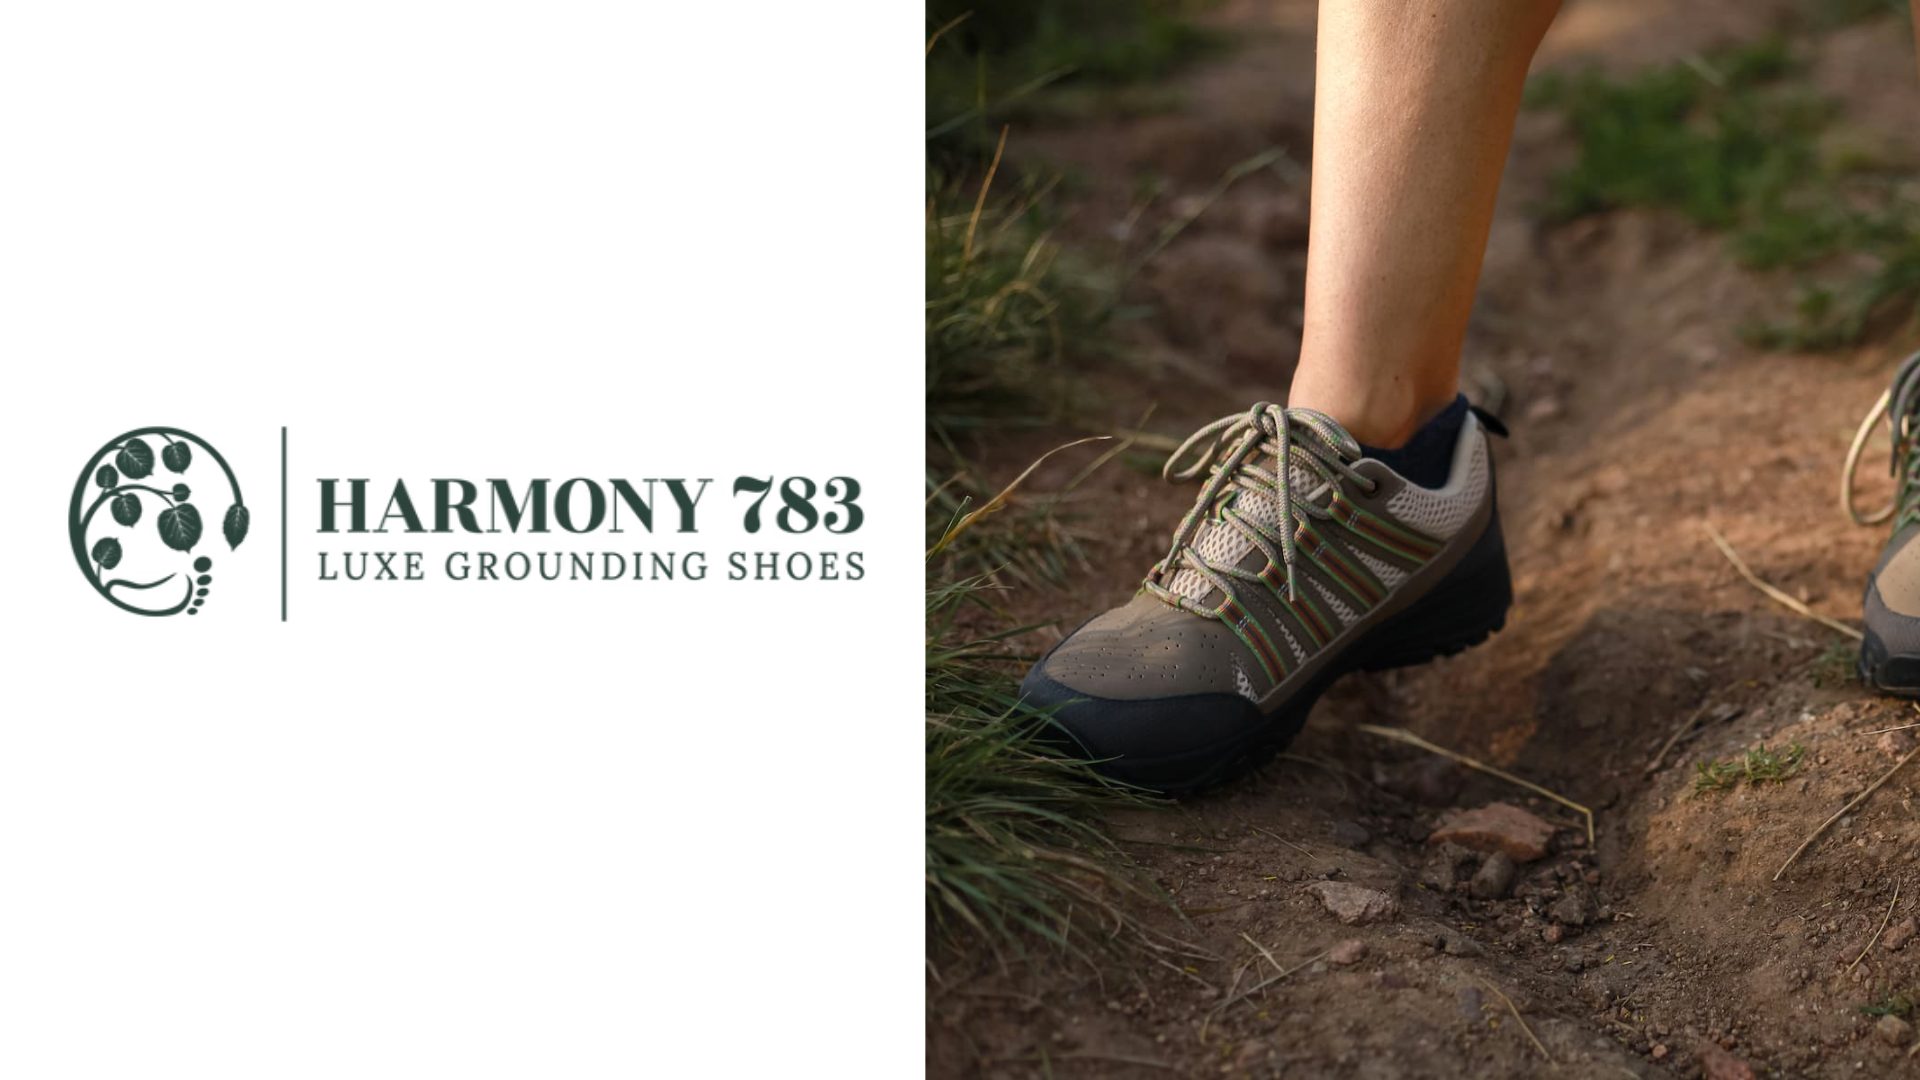 harmony 783 shoes